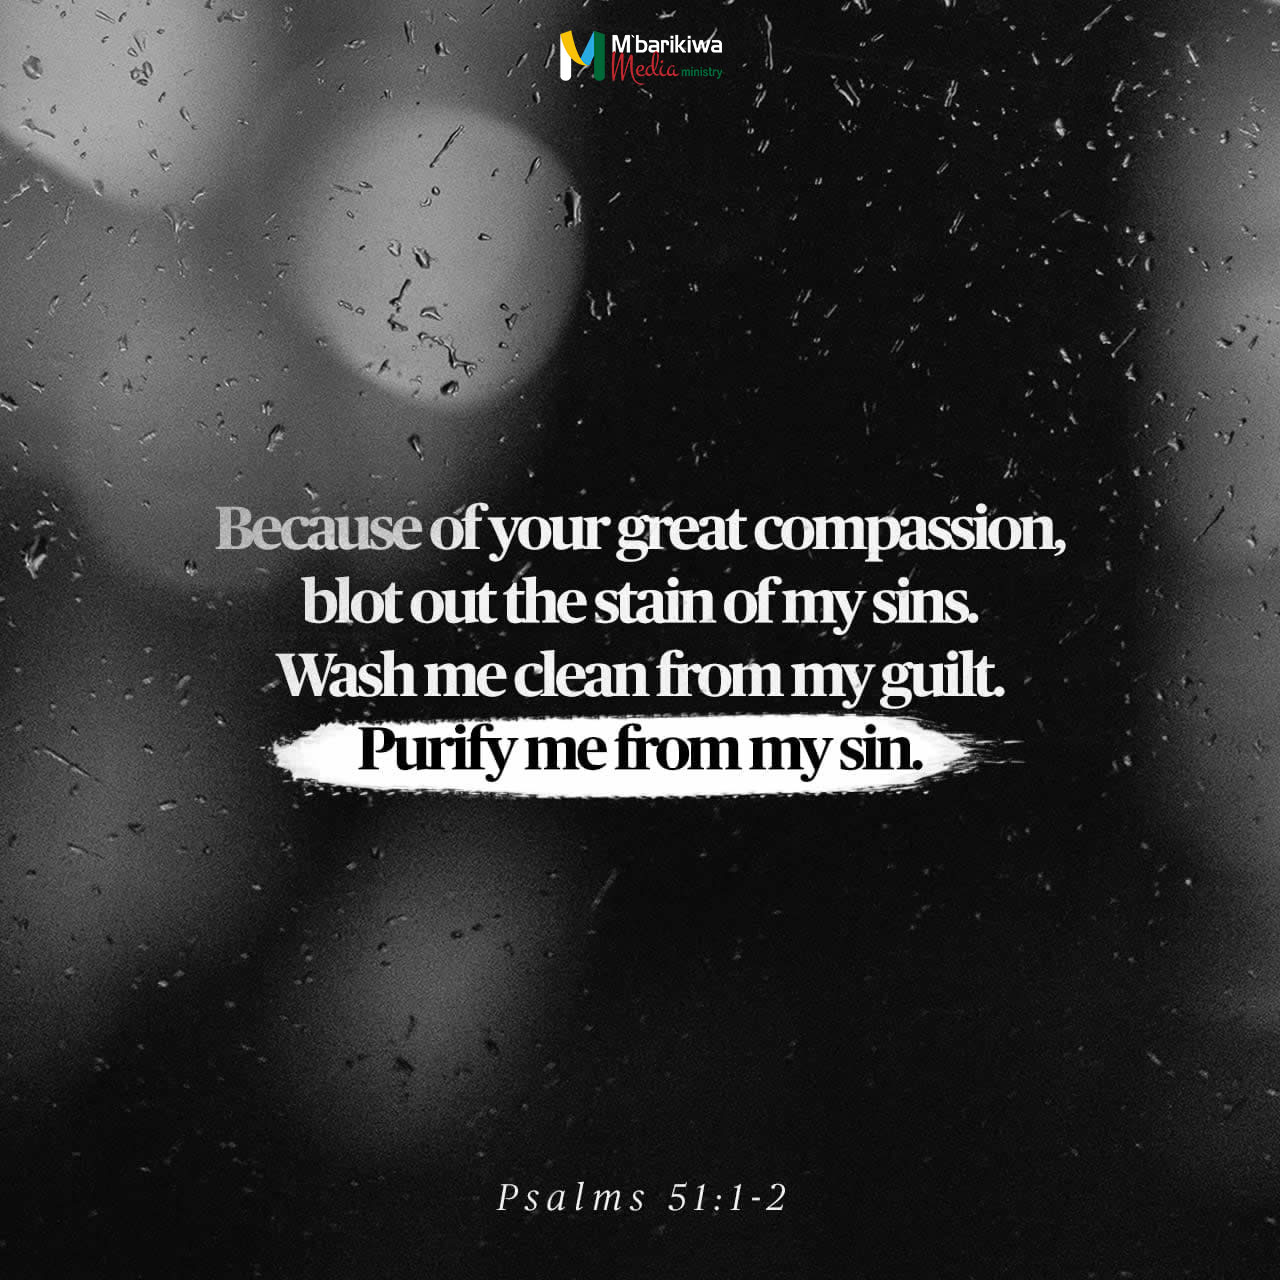 Psalms 51:1-2 (NIV)